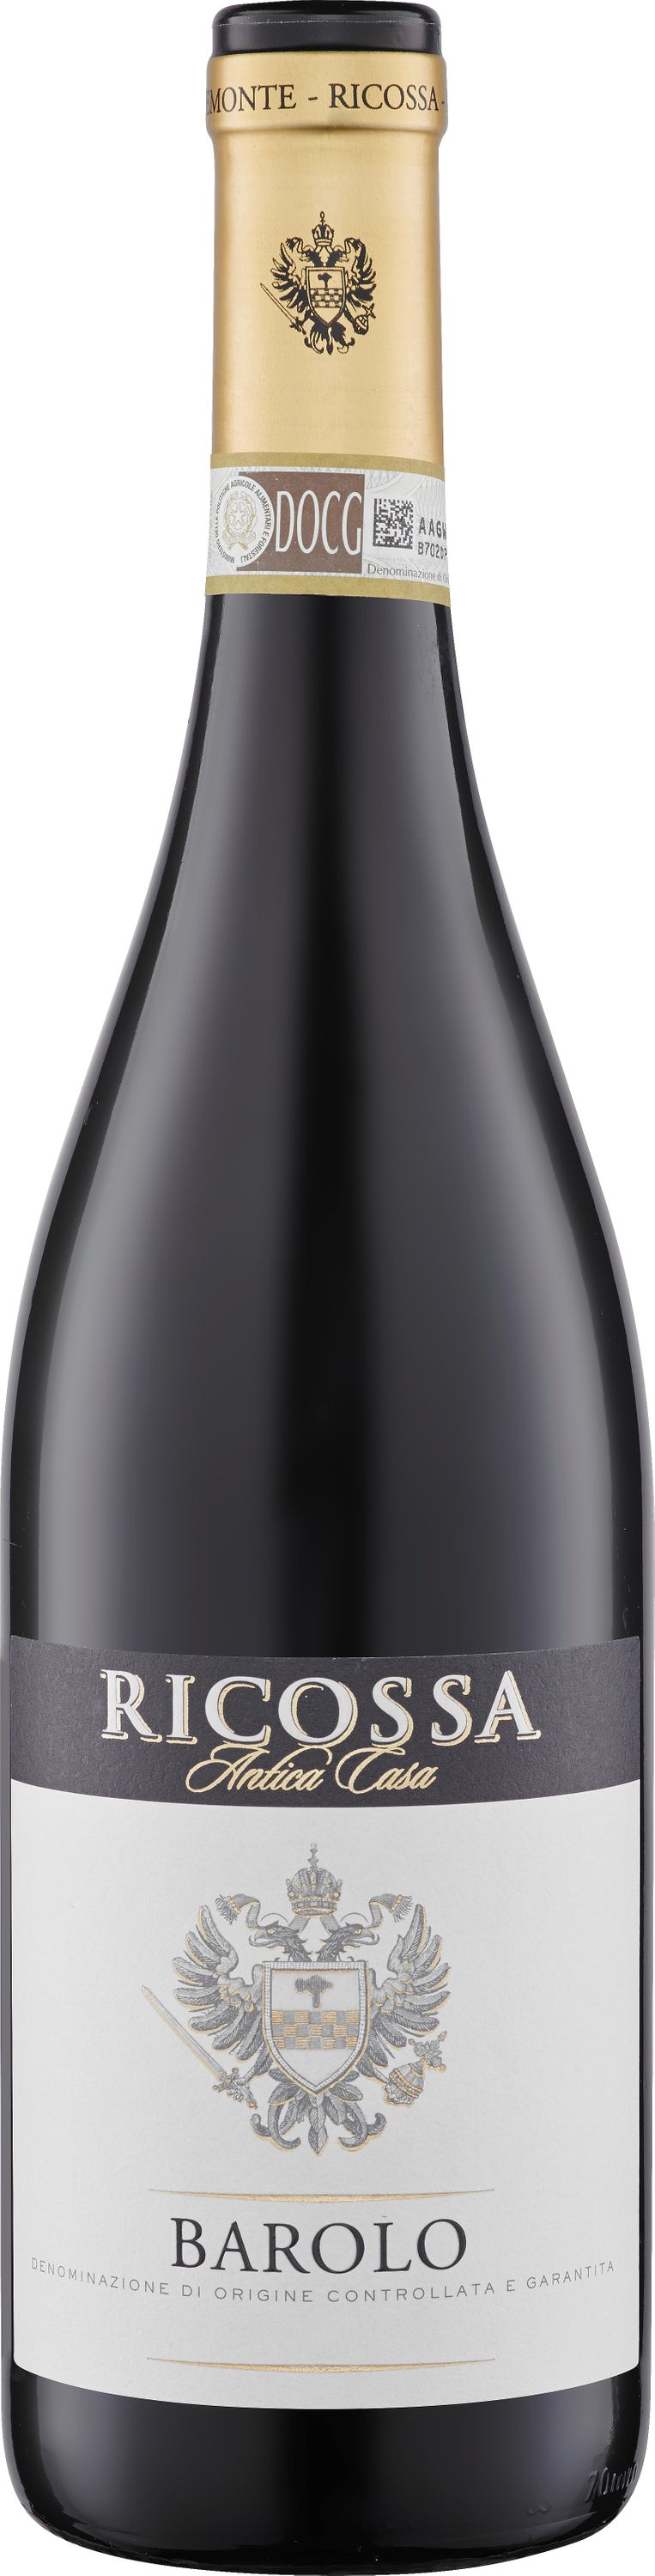 Barolo DOCG Ricossa aus Barolo Italien Rotwein trocken 750ml 14,5% Vol